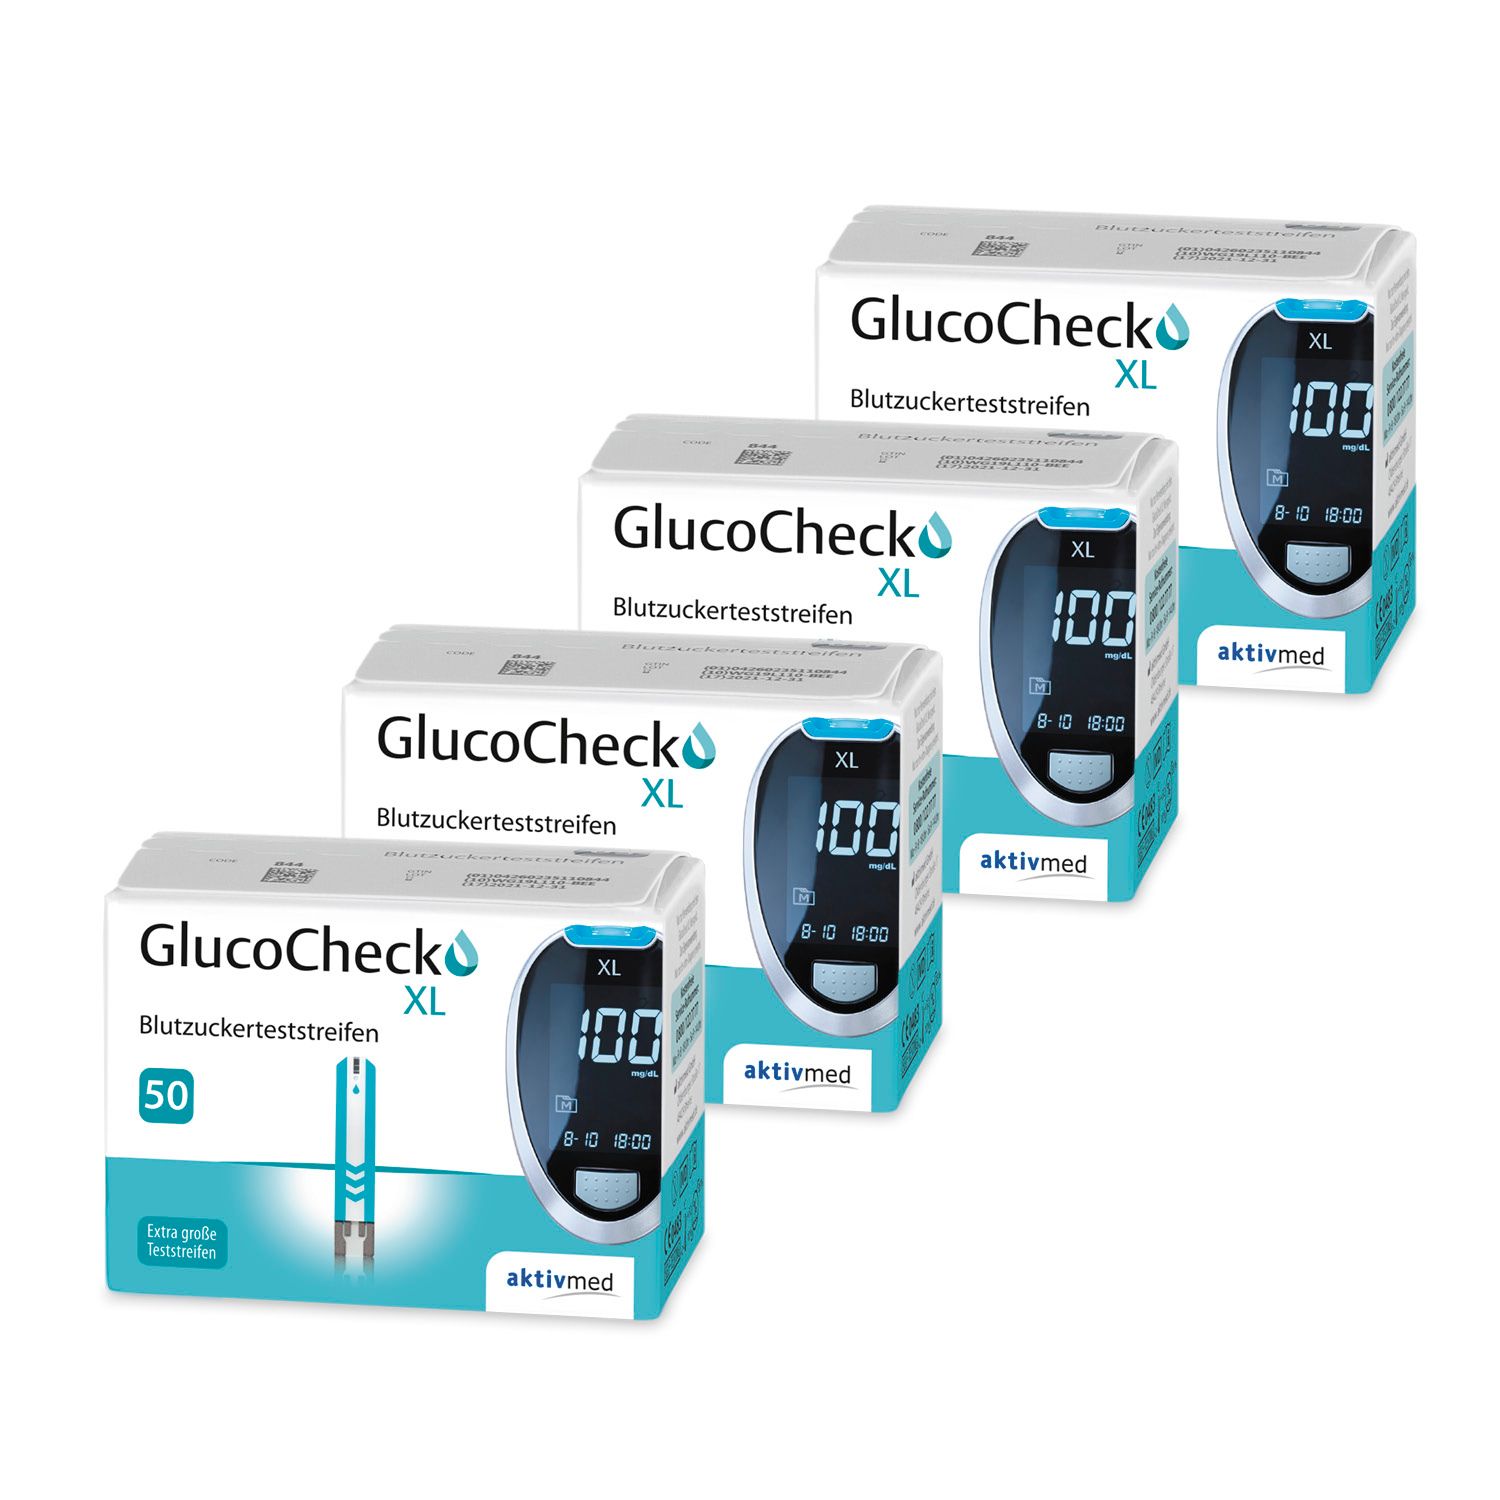 Glucocheck XL test strip [200 pieces] for blood sugar control in diabetes